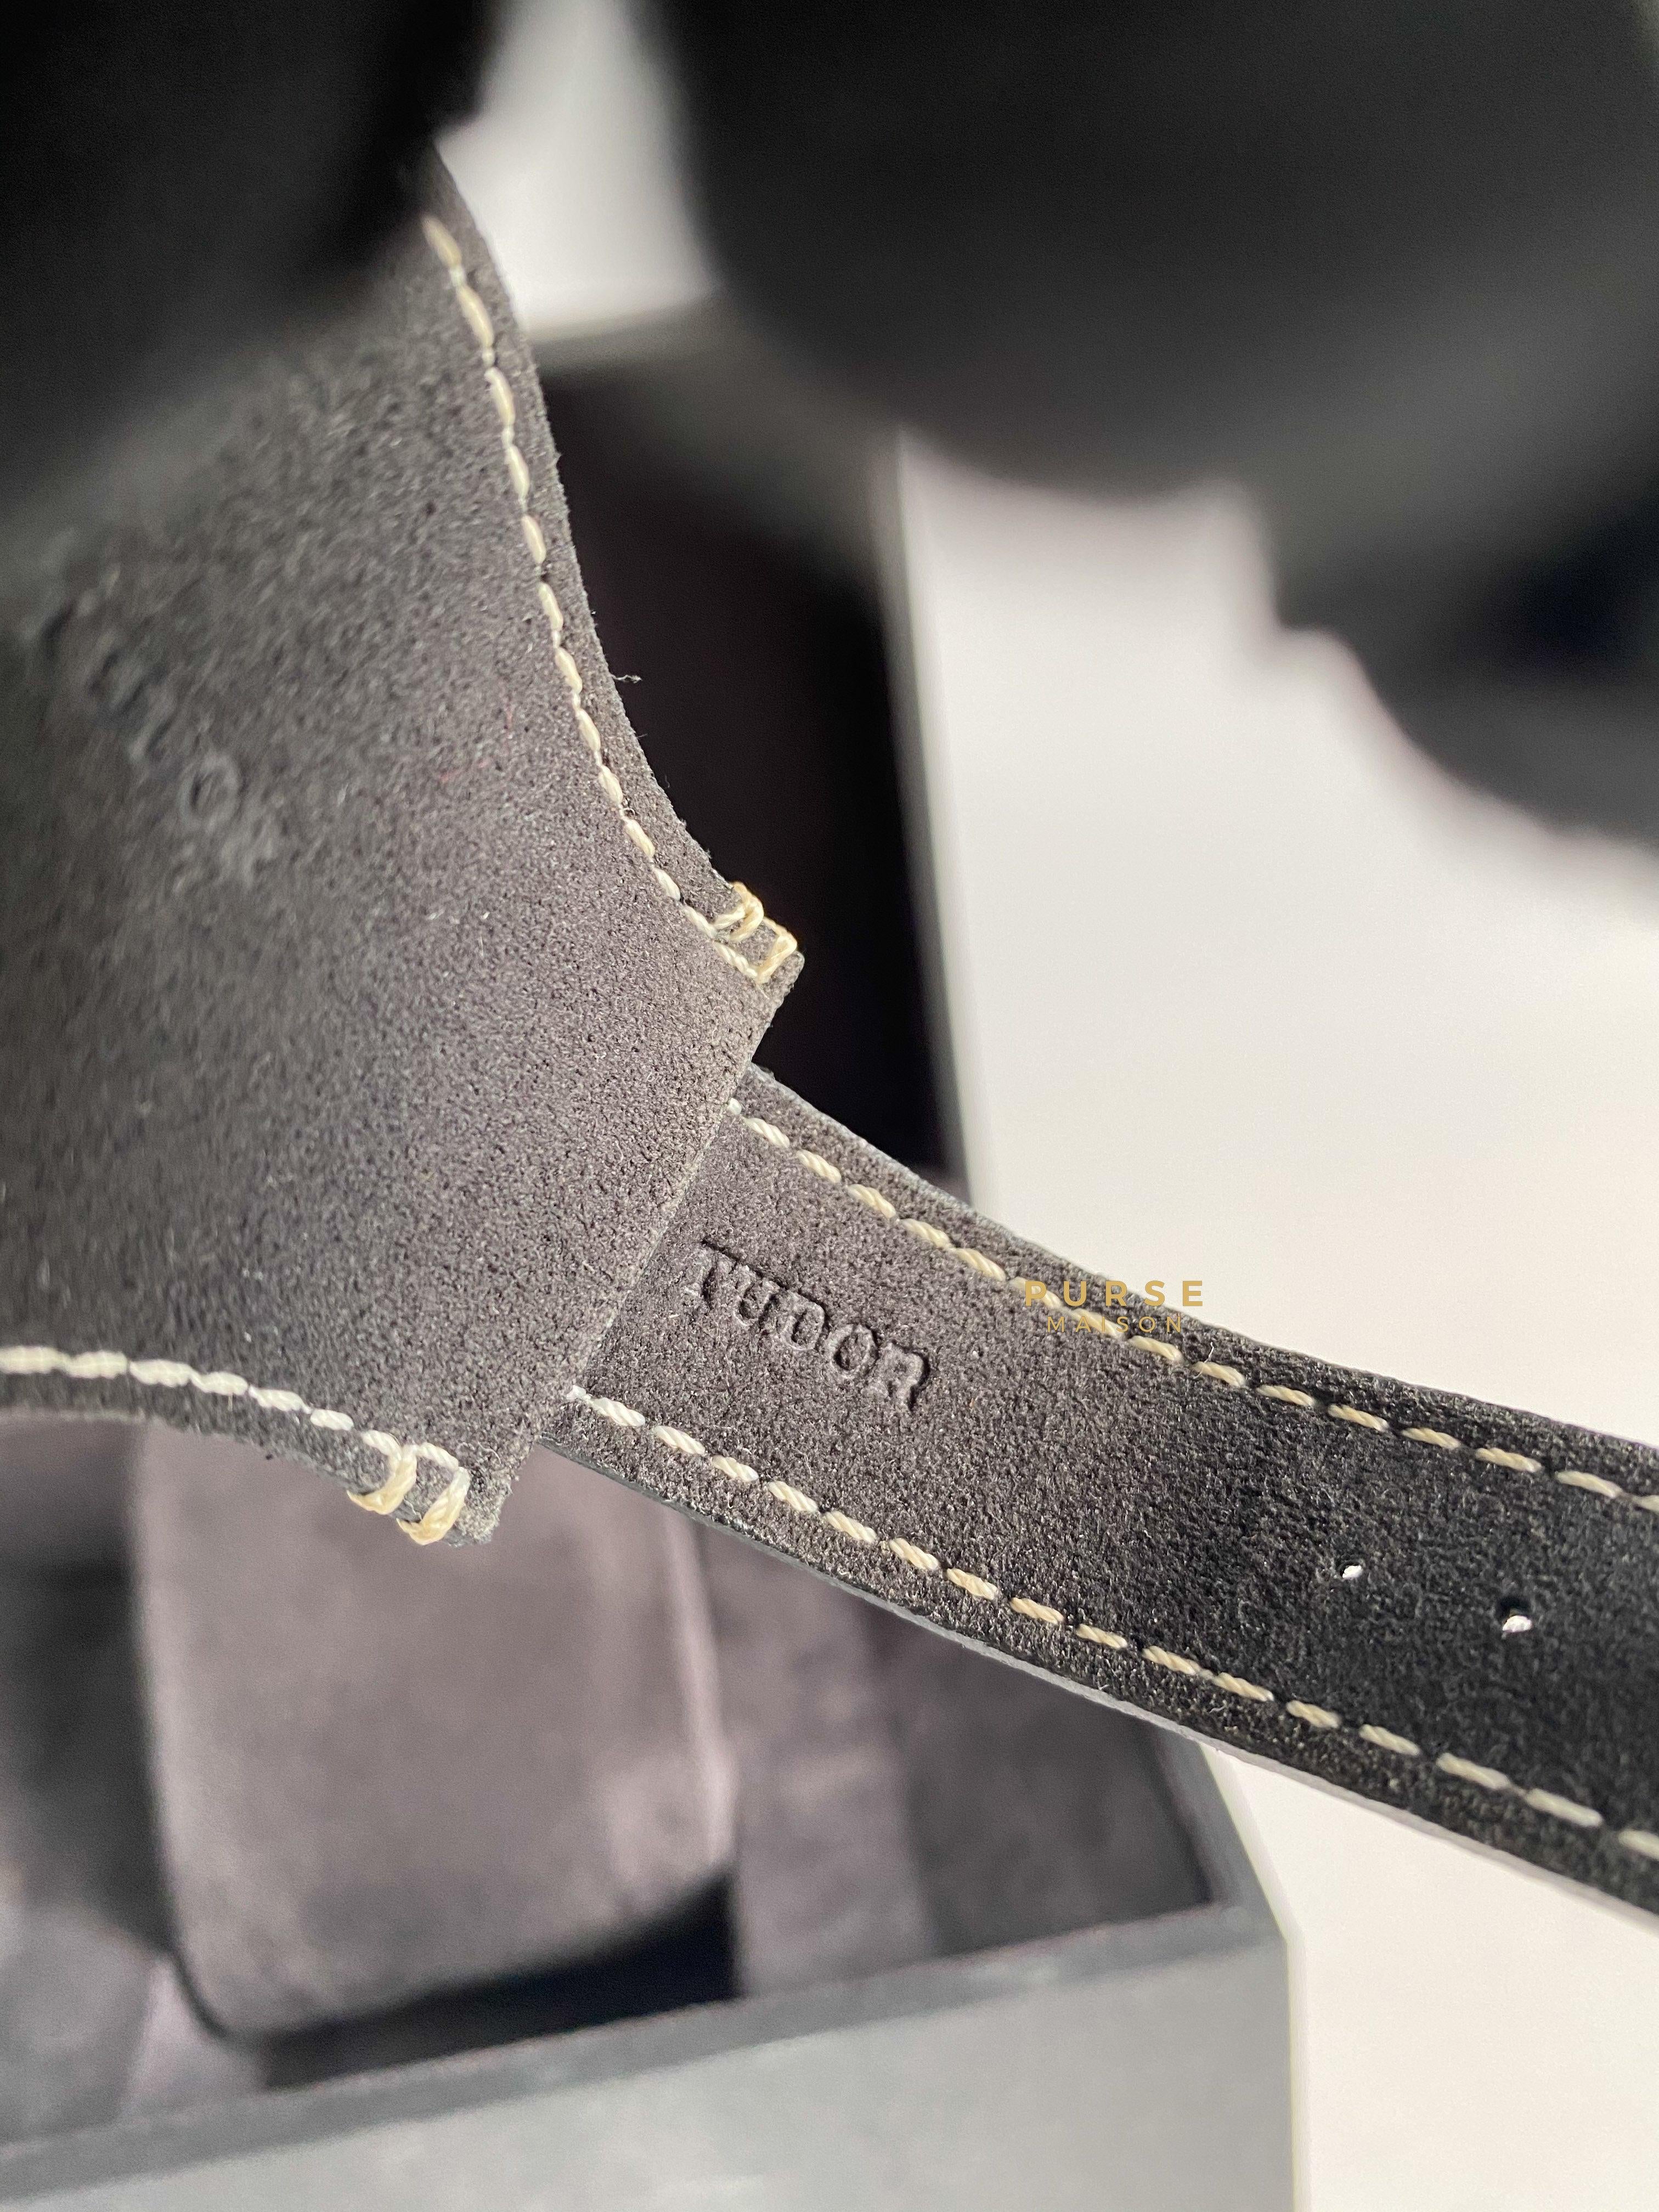 Tudor Black Bay Chrono Leather Strap Men's Watch | Purse Maison Luxury Bags Shop